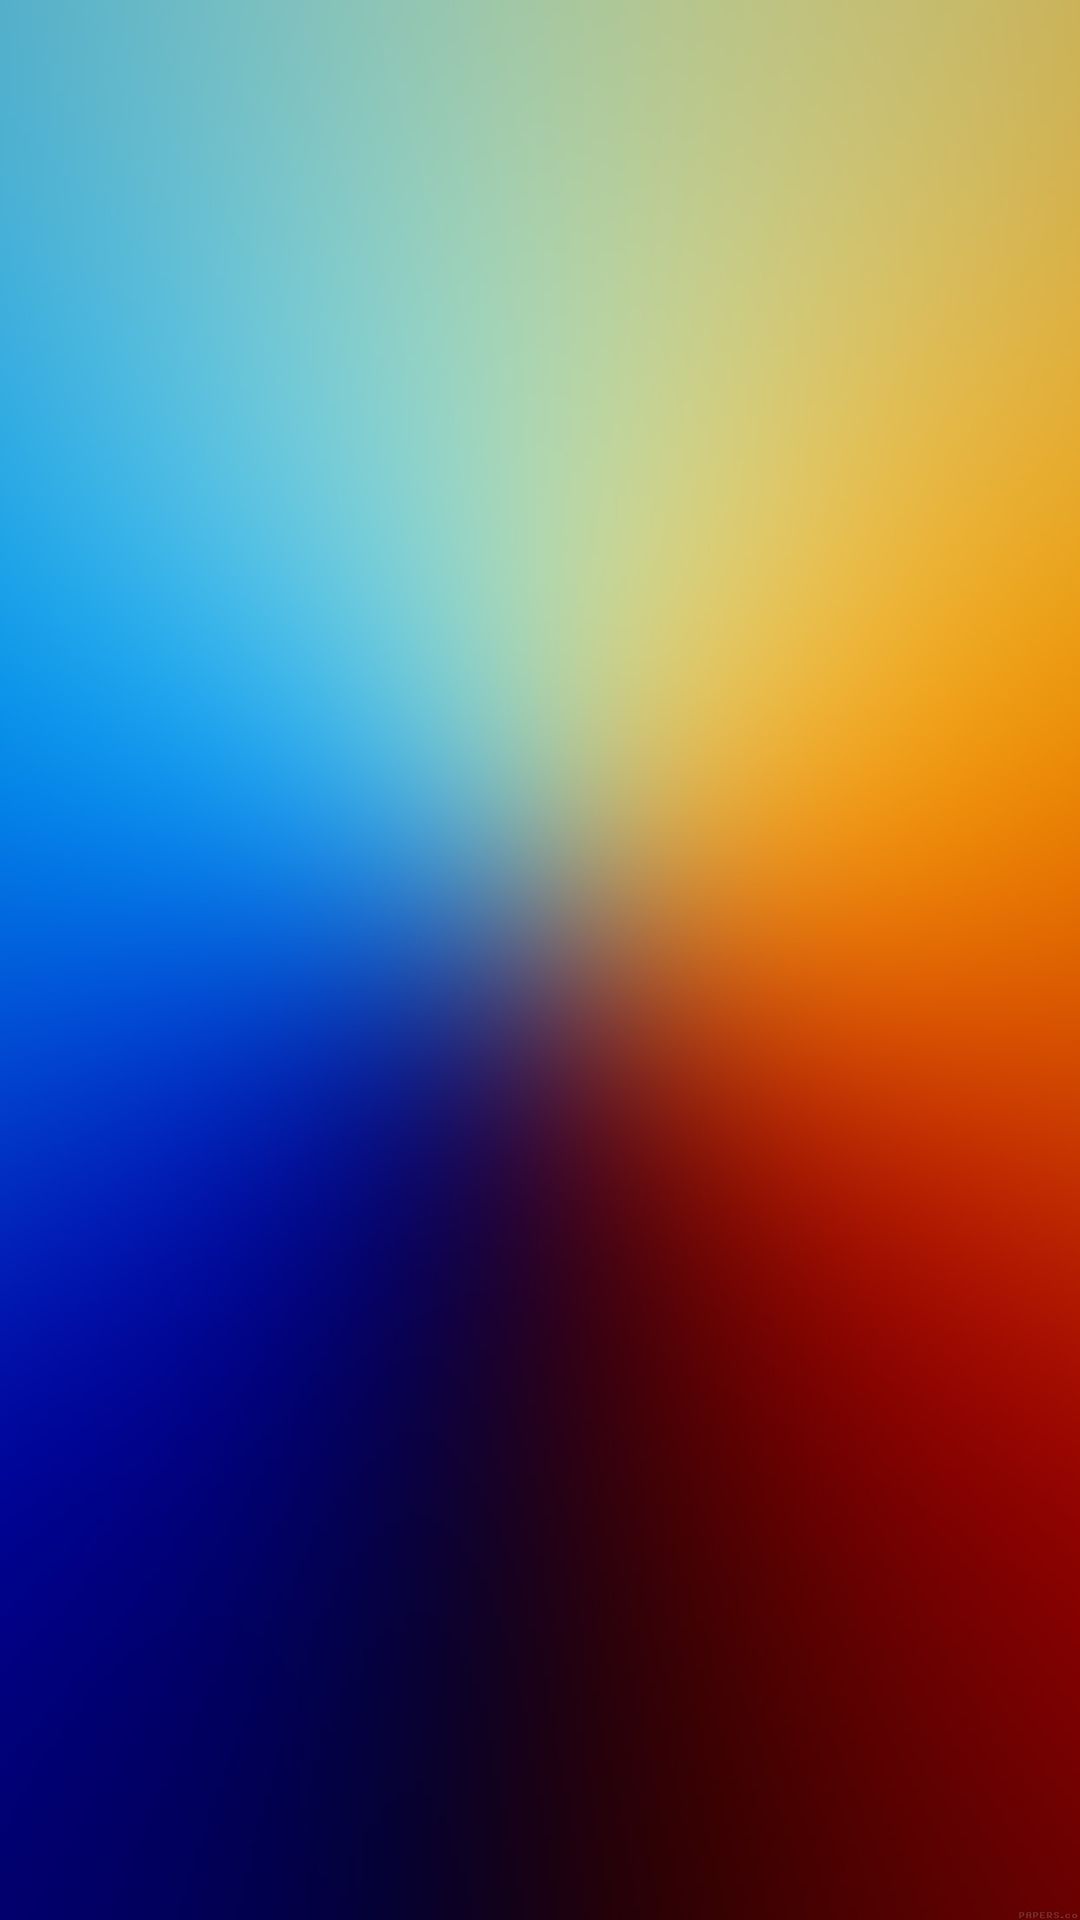 Rainbow Circle Gradation Blur iPhone 6 wallpaper. Abstract iphone wallpaper, Desktop wallpaper art, Free iphone wallpaper